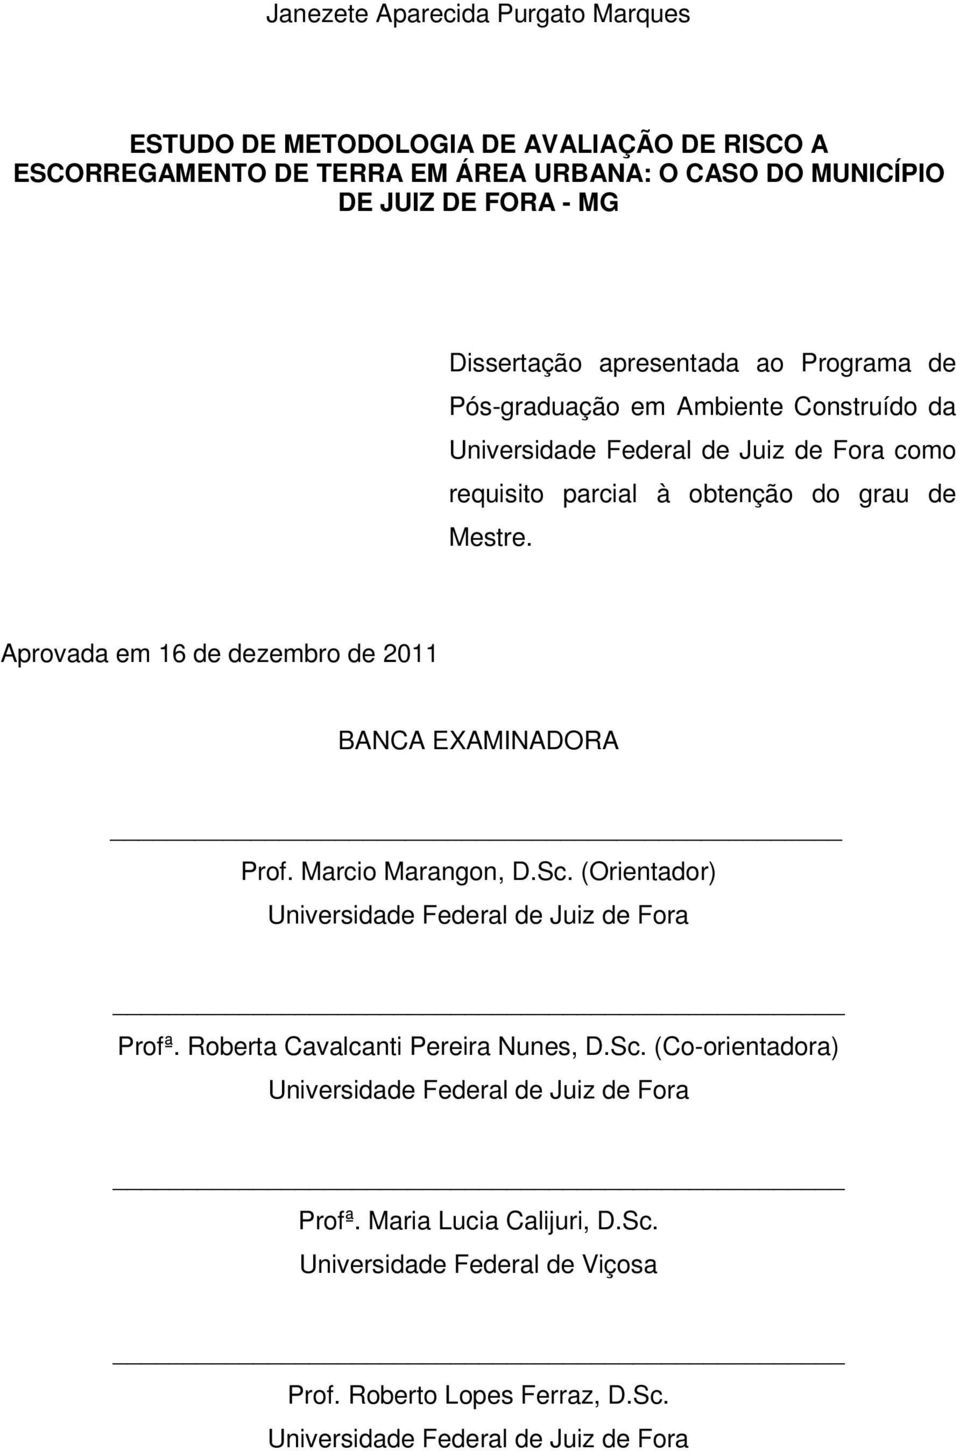 Aprovada em 16 de dezembro de 2011 BANCA EXAMINADORA Prof. Marcio Marangon, D.Sc. (Orientador) Universidade Federal de Juiz de Fora Profª. Roberta Cavalcanti Pereira Nunes, D.